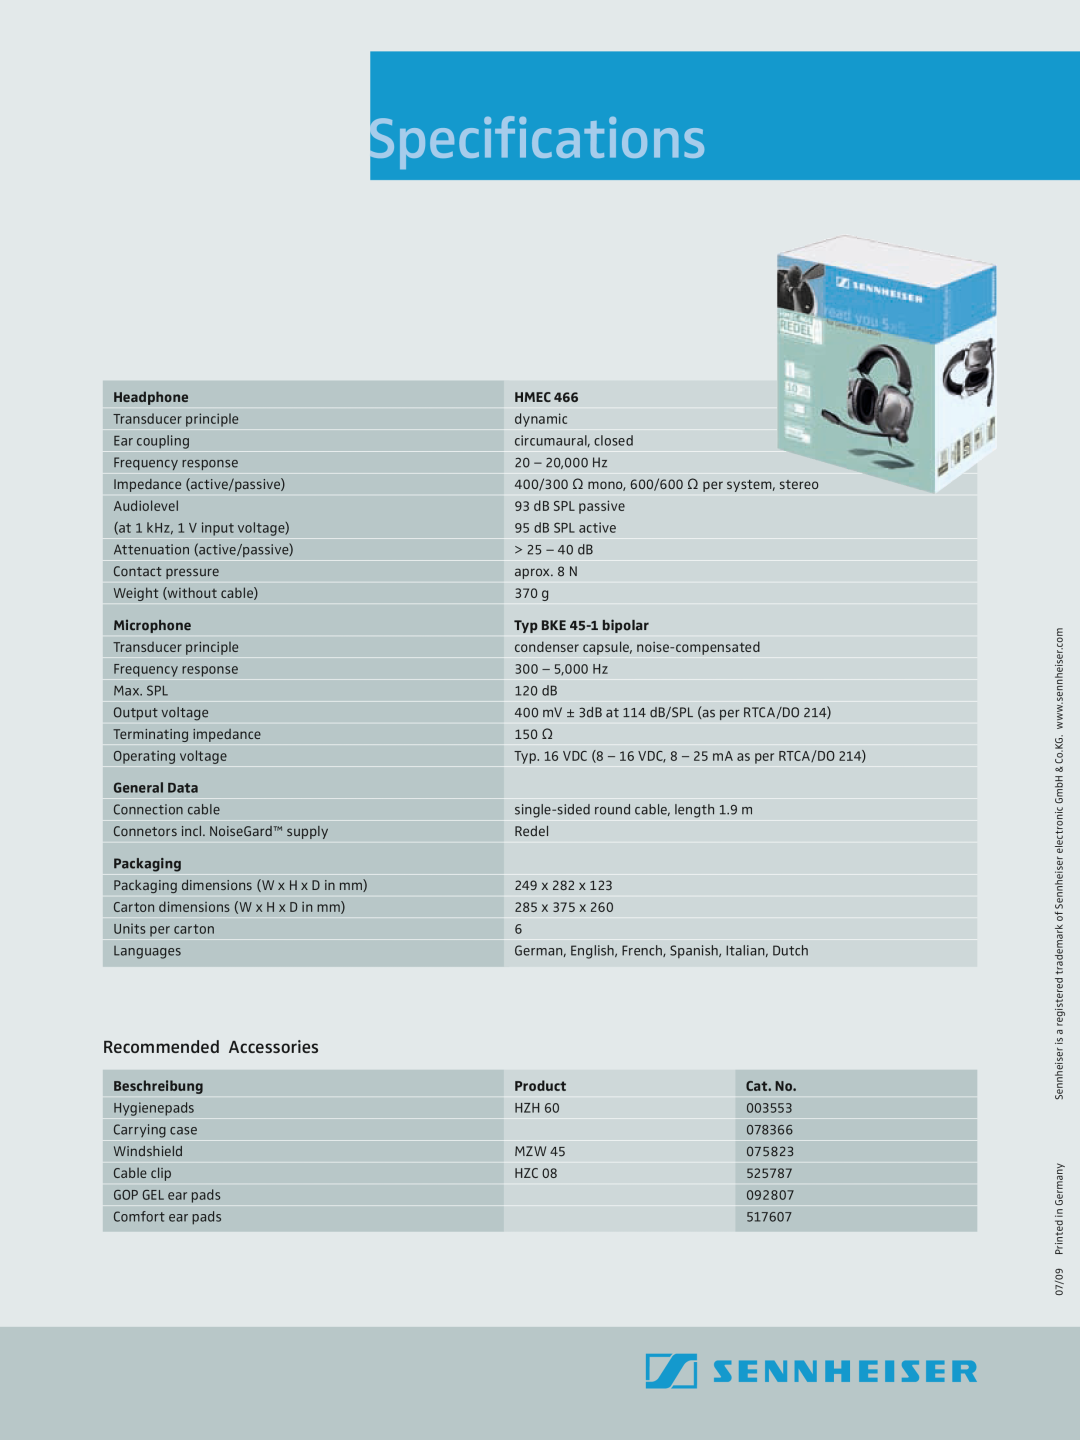 Sennheiser HMEC 466 Specifications, Headphone, Hmec, Microphone, Typ BKE 45-1bipolar, General Data, Packaging, Product 